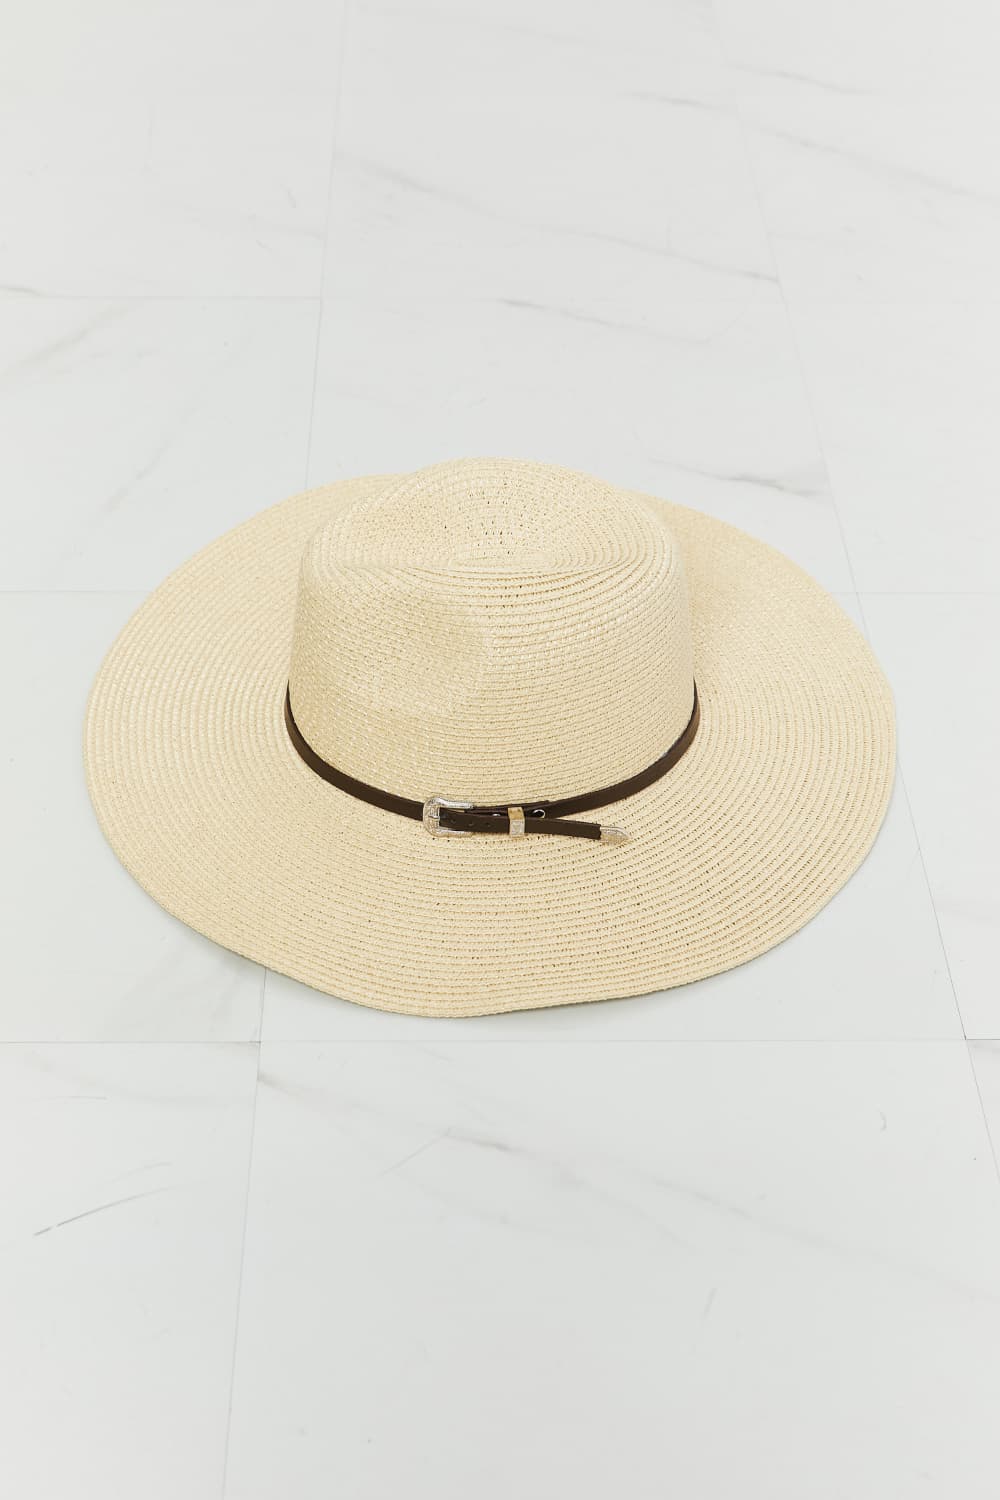 fame-boho-summer-straw-fedora-hat